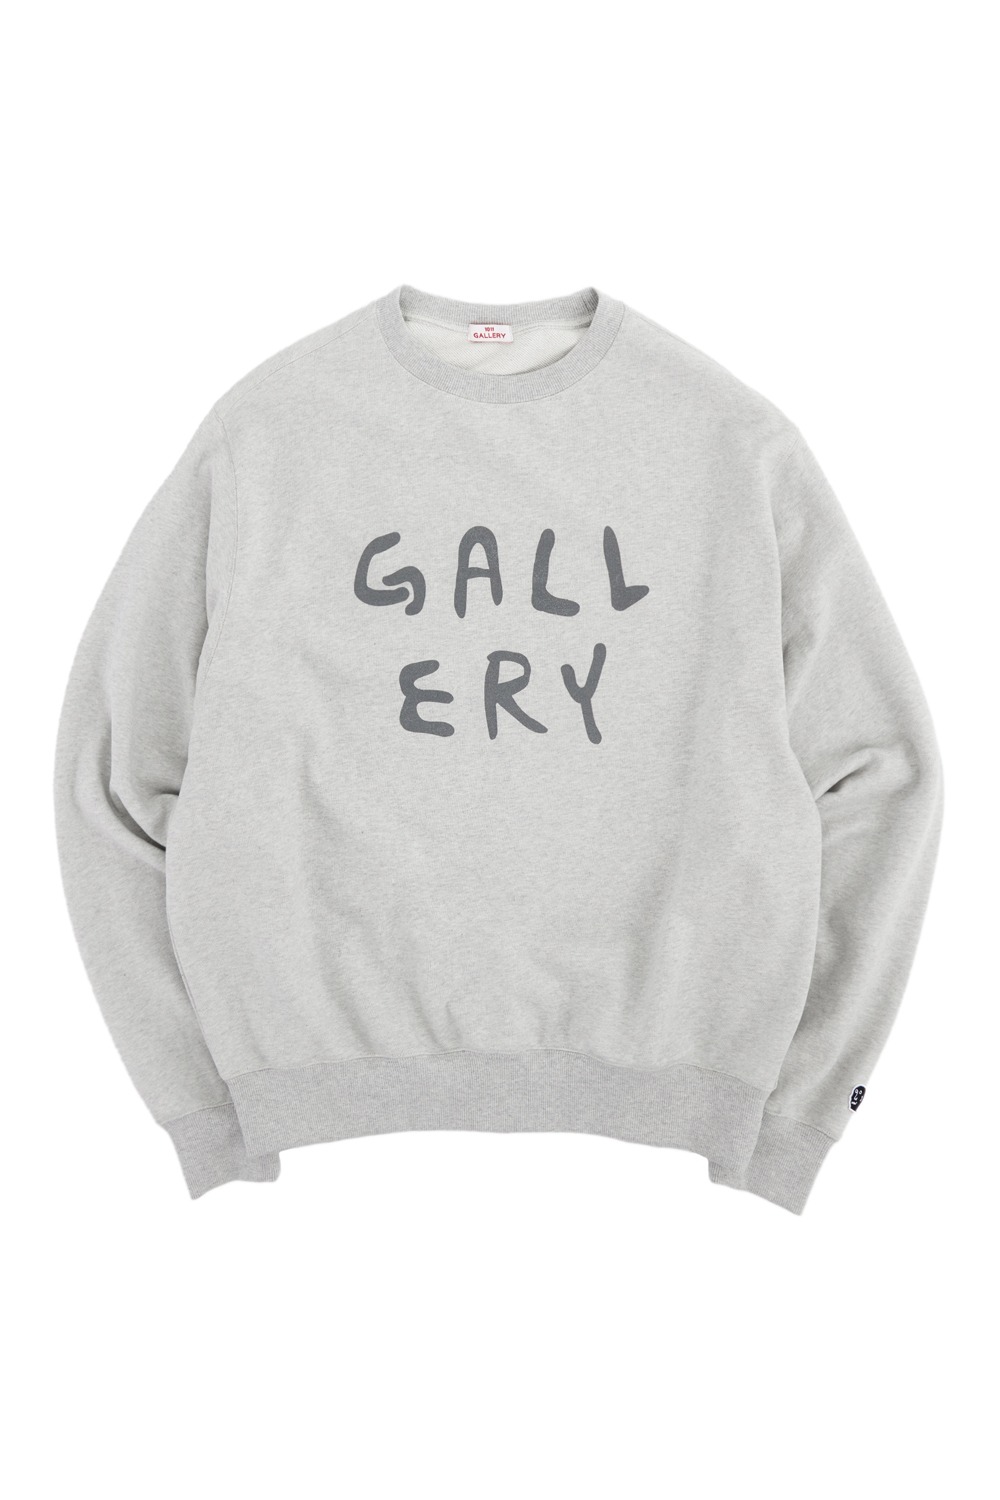 Gallery Logo Graphic Sweatshirt - Light Grey